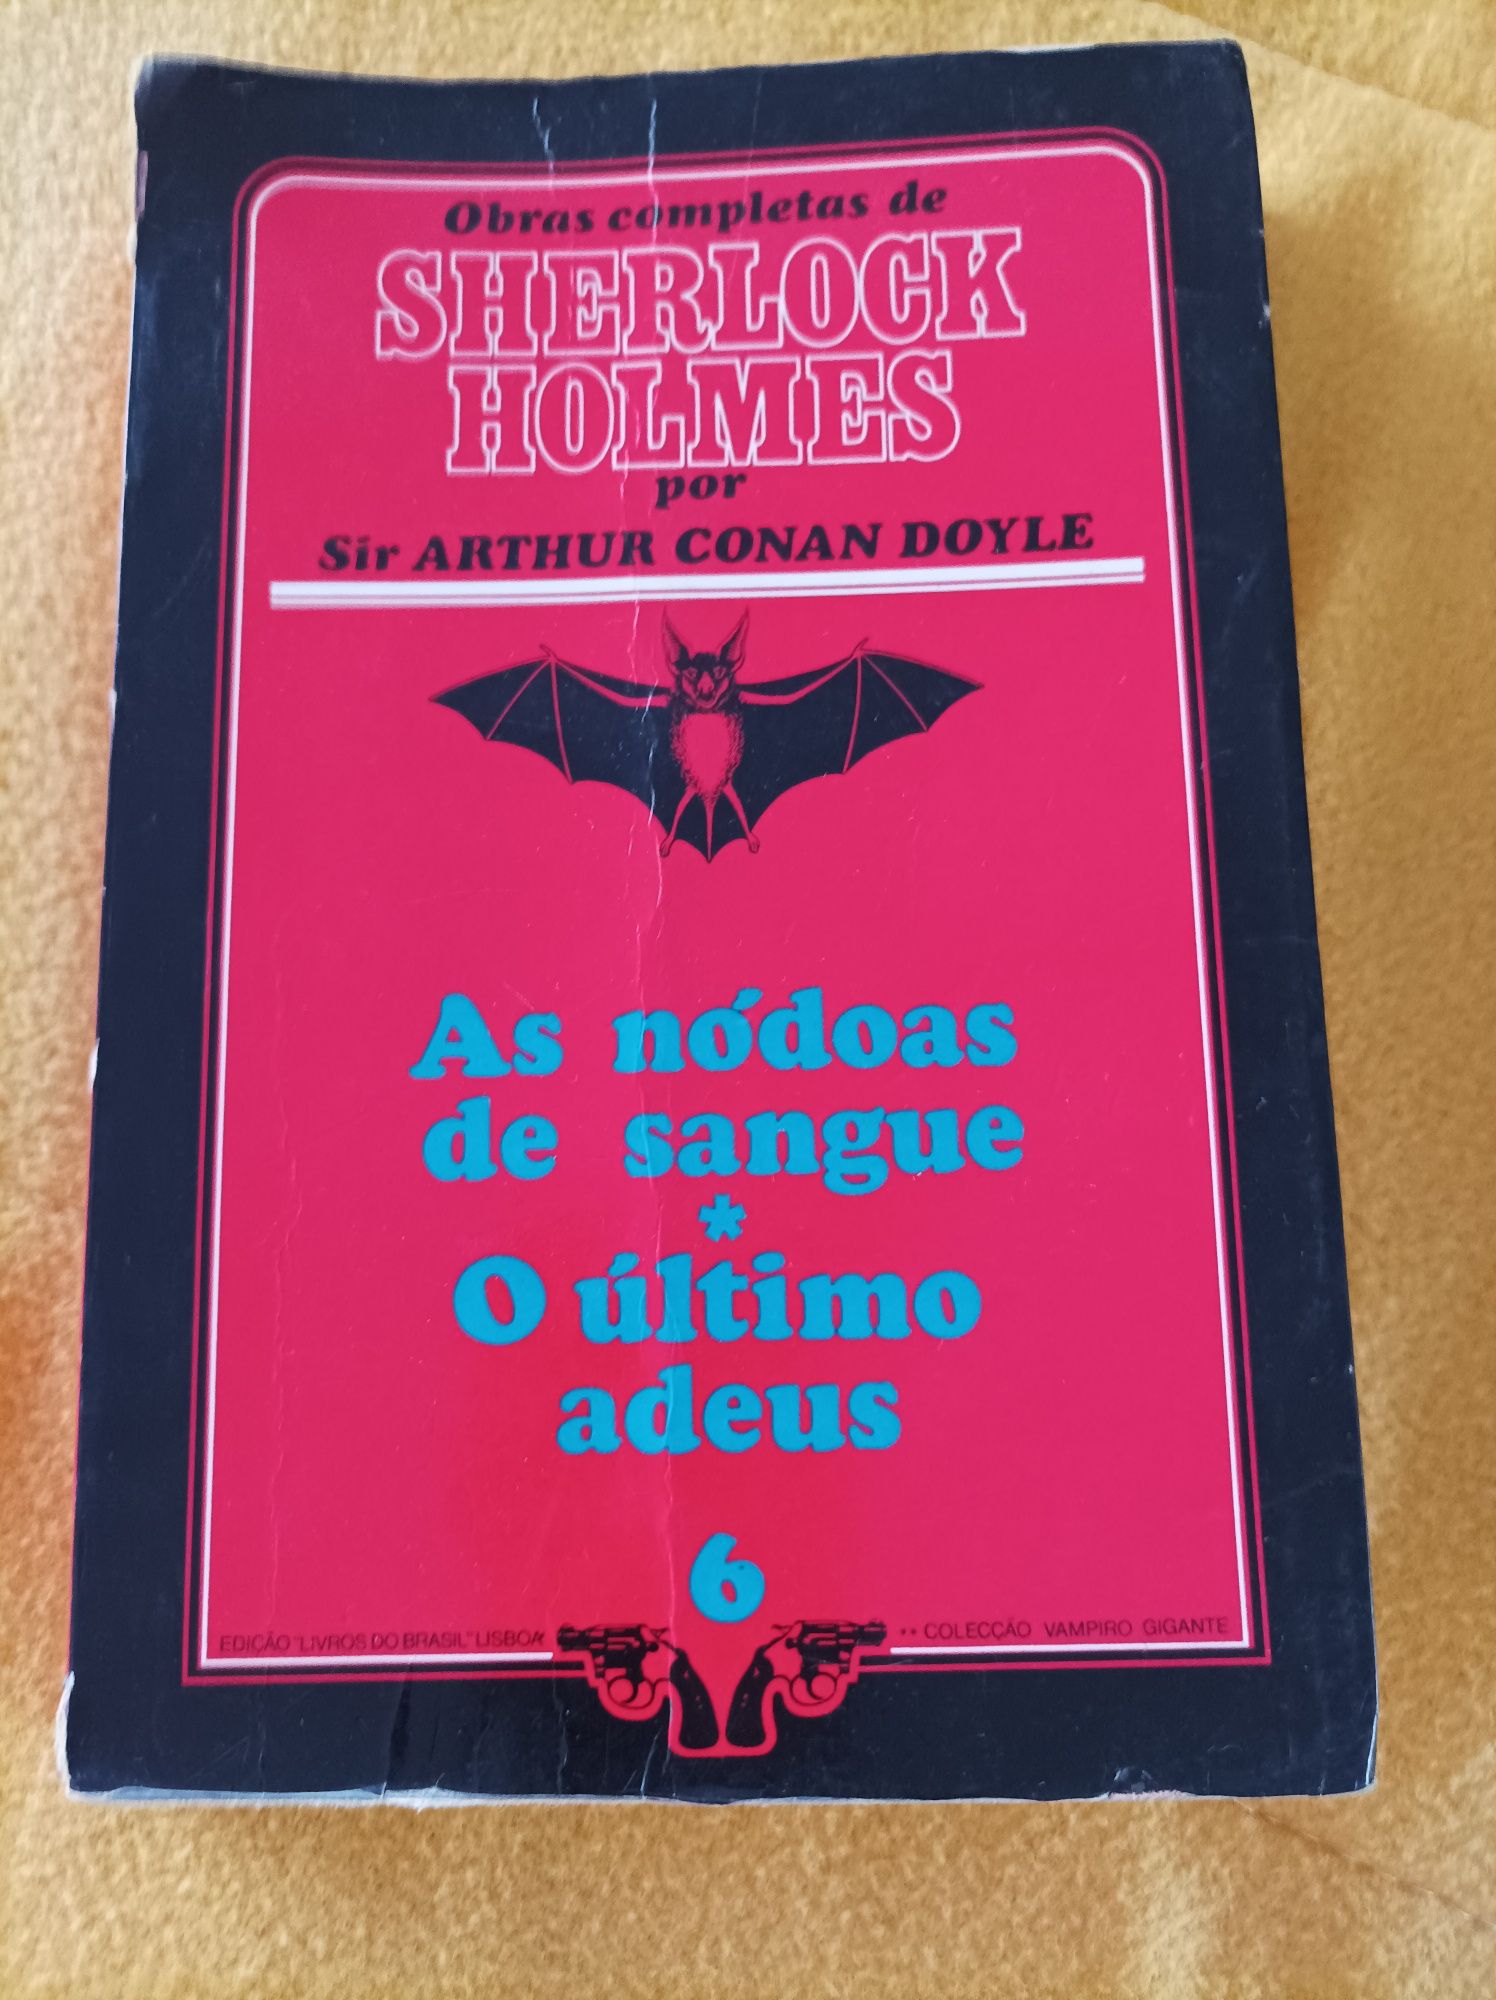 Livro de Sherlock holmes